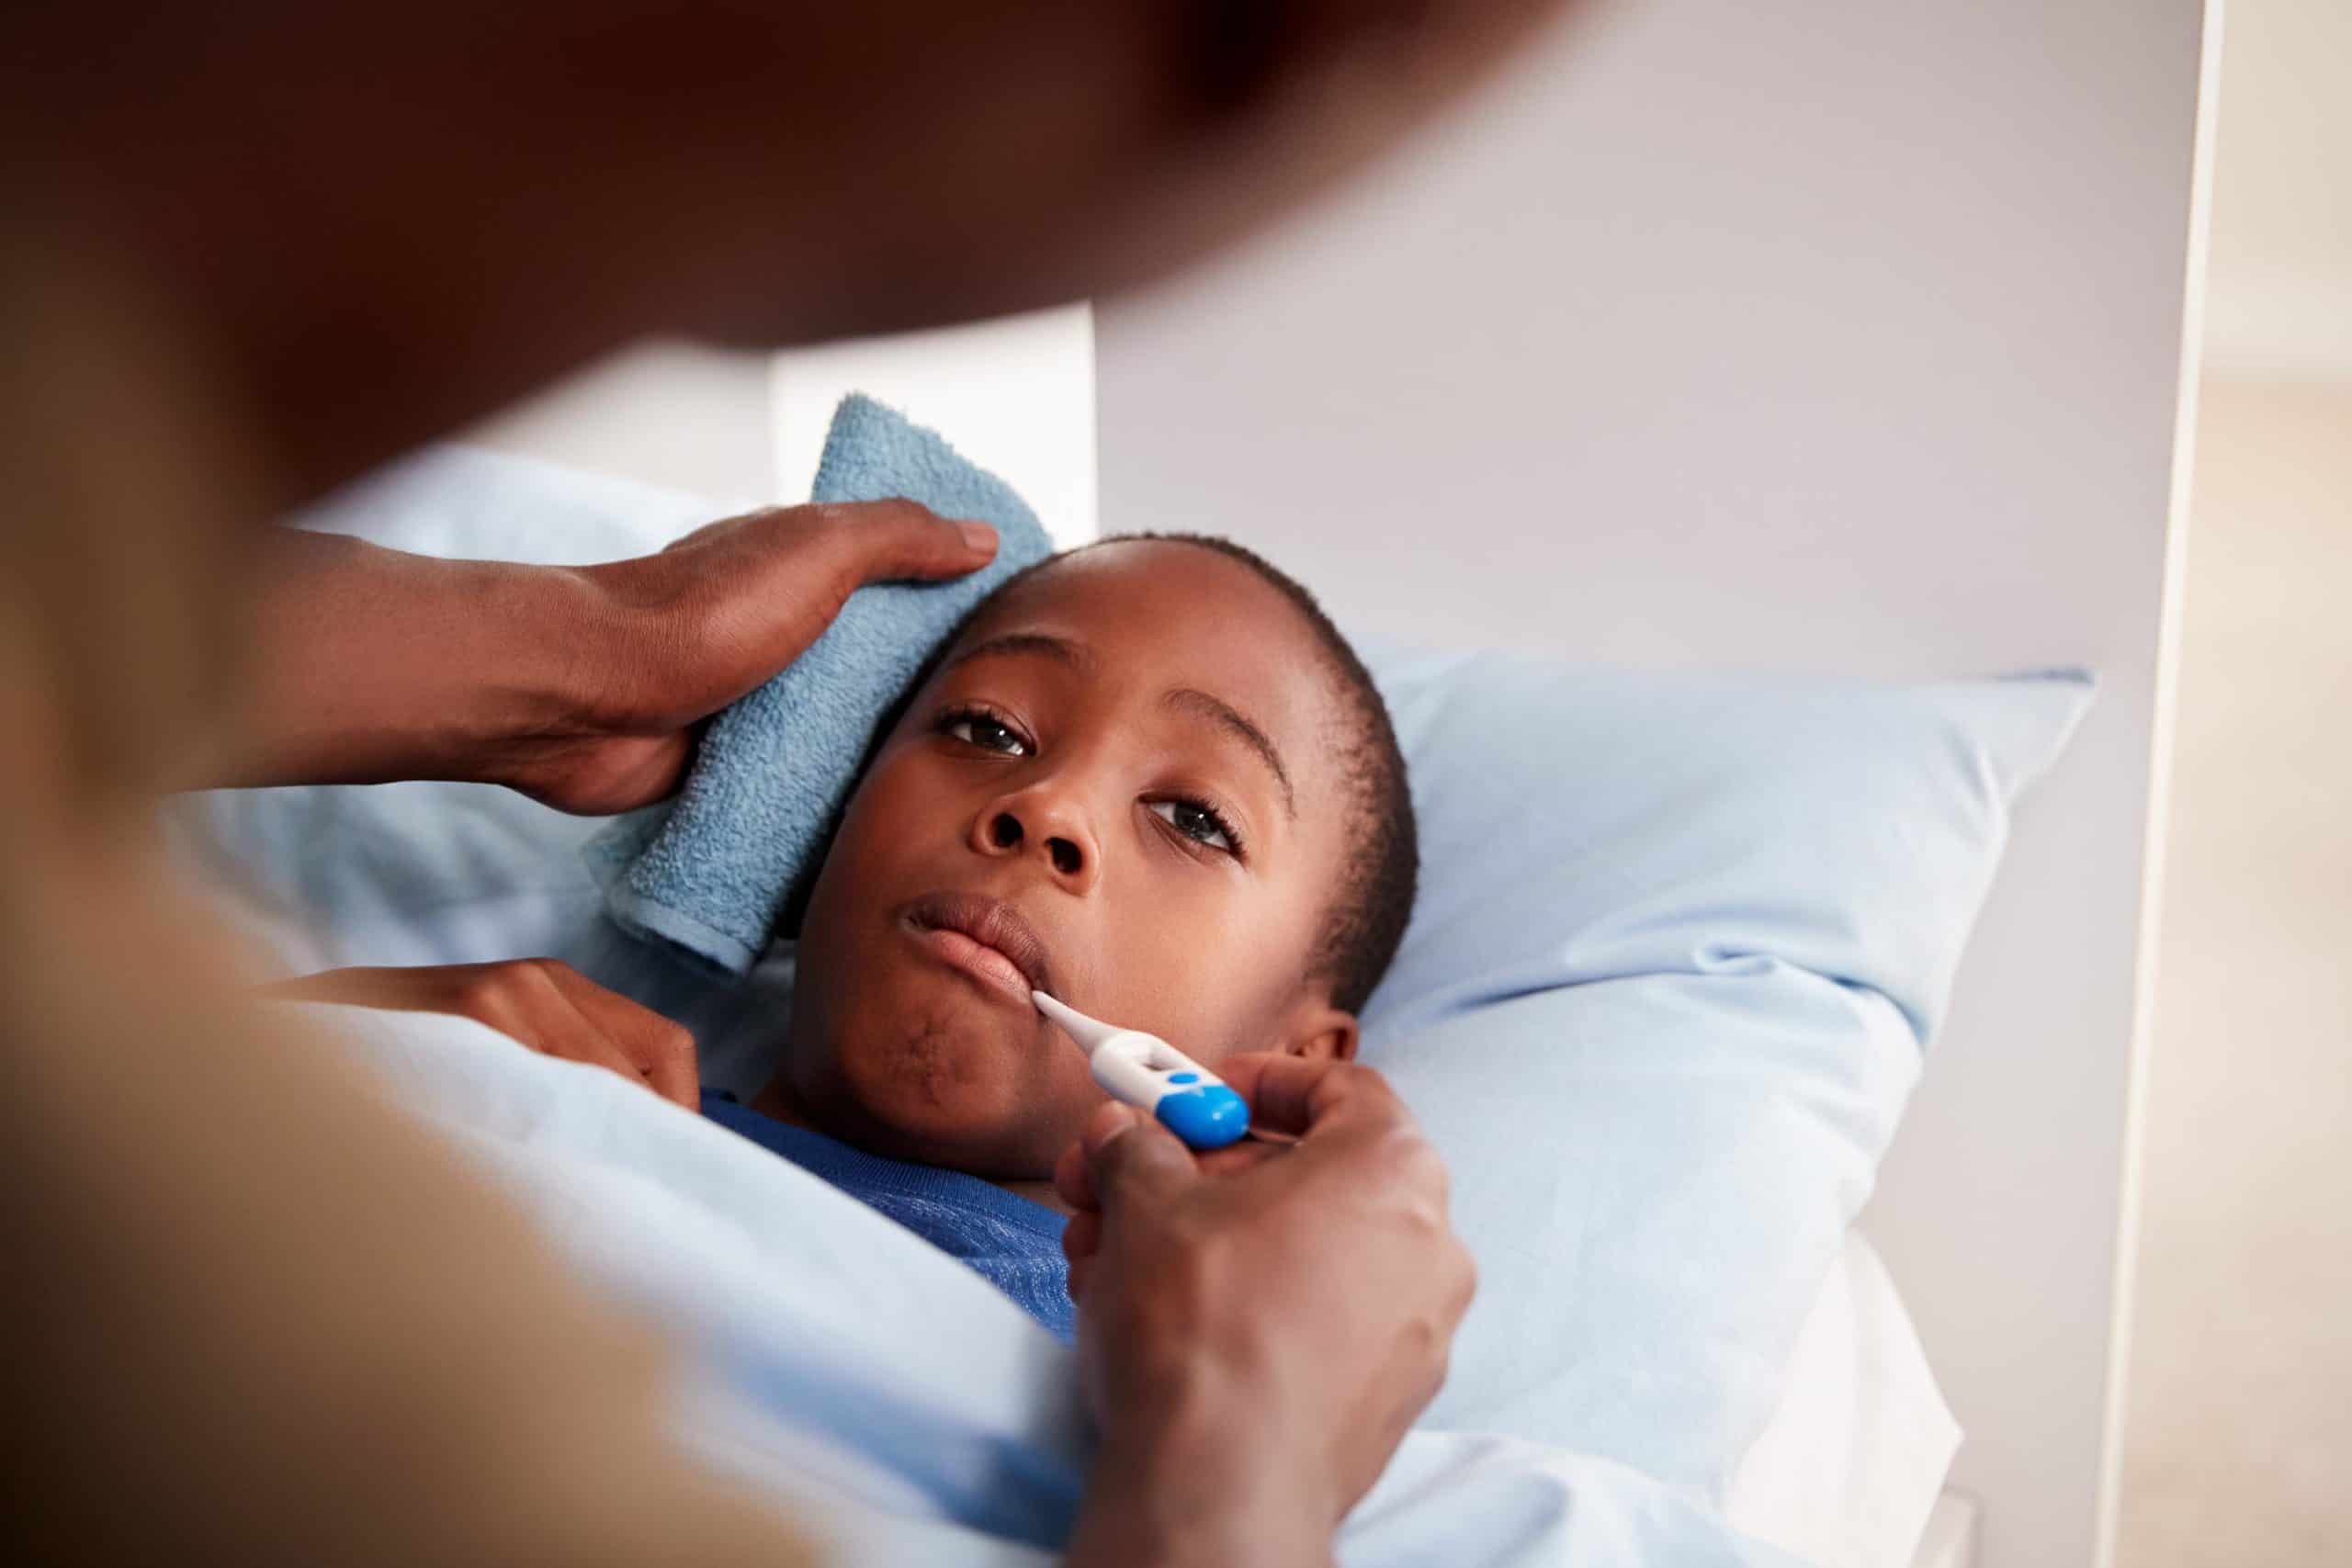 MIS-C Disorder Emerges In Kids Due To Coronavirus